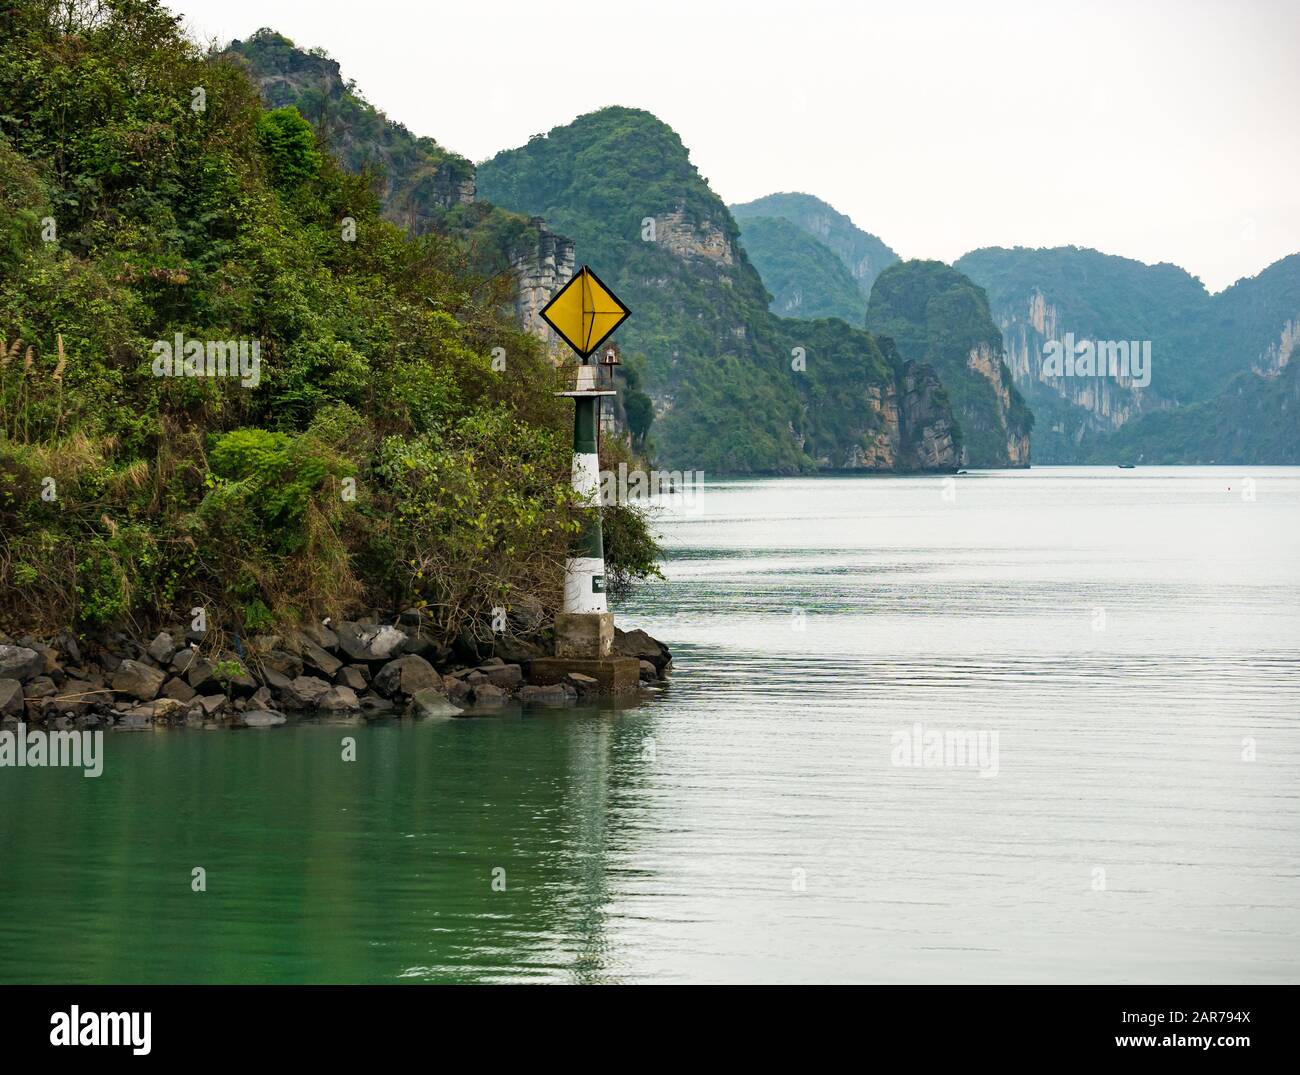 Navigational marker on rocky shore with limestone karst cliffs, Halong Bay, Vietnam, Asia Stock Photo